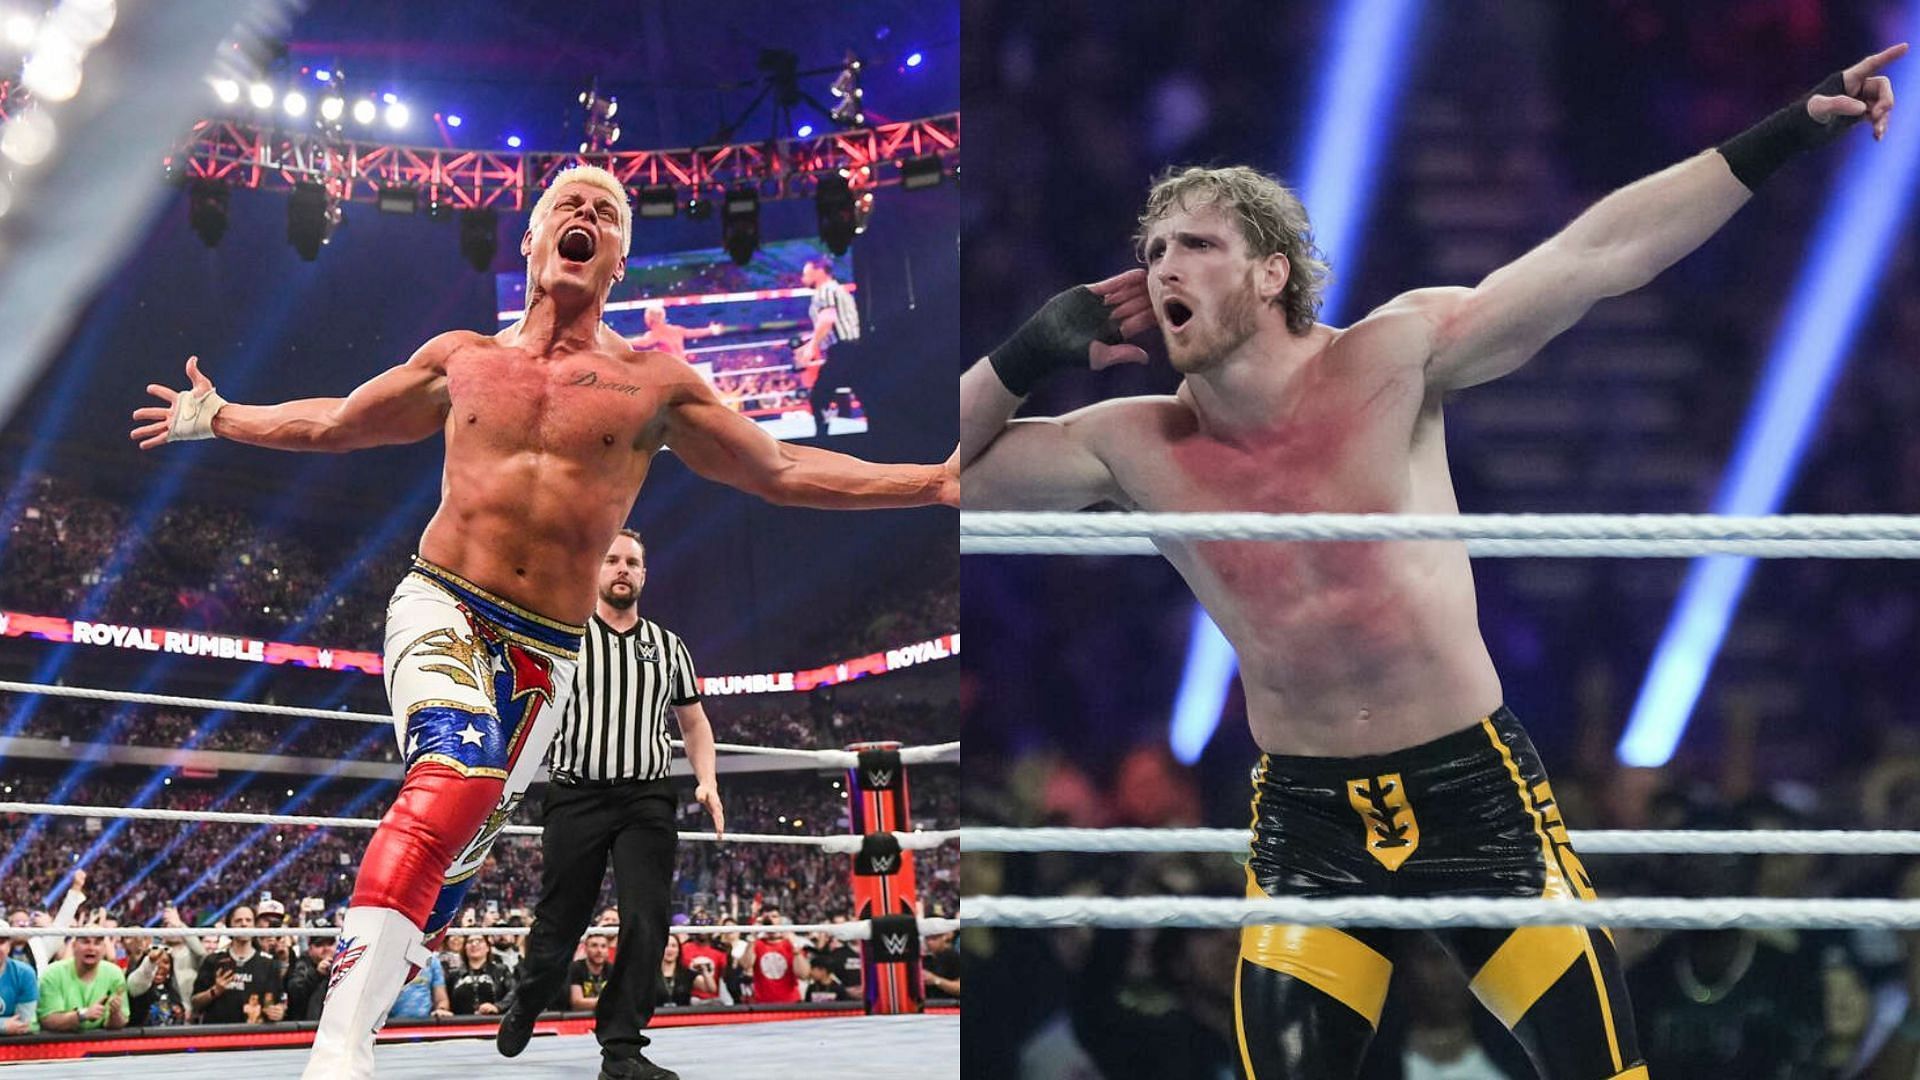 Cody Rhodes won the Royal Rumble Match